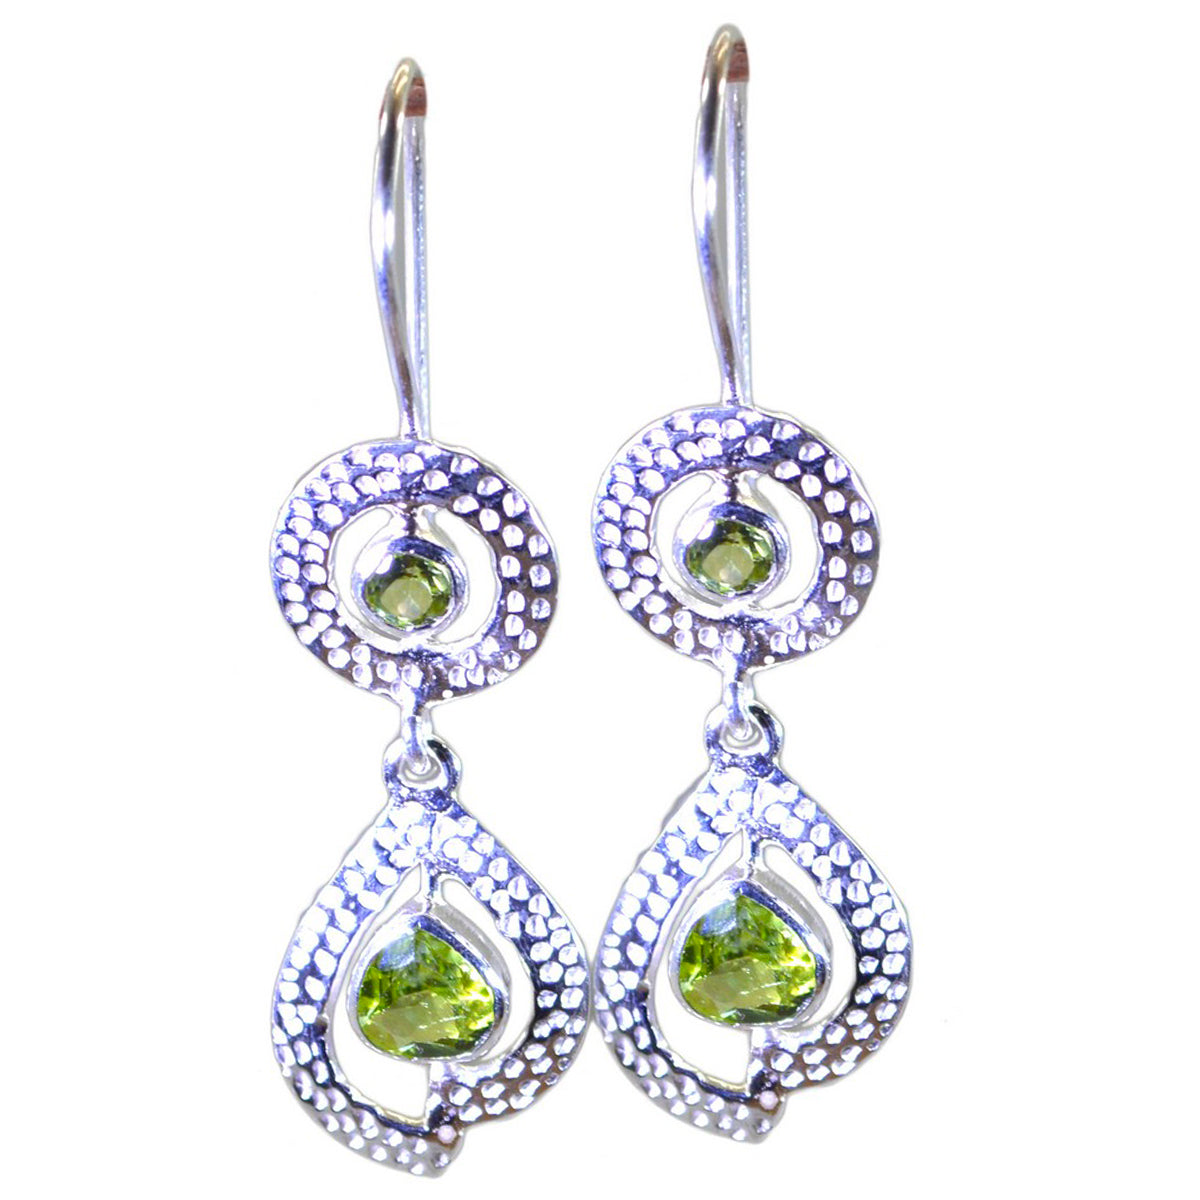 Riyo Nice Gemstone multi shape Faceted Green Peridot Silver Earring gift for christmas day